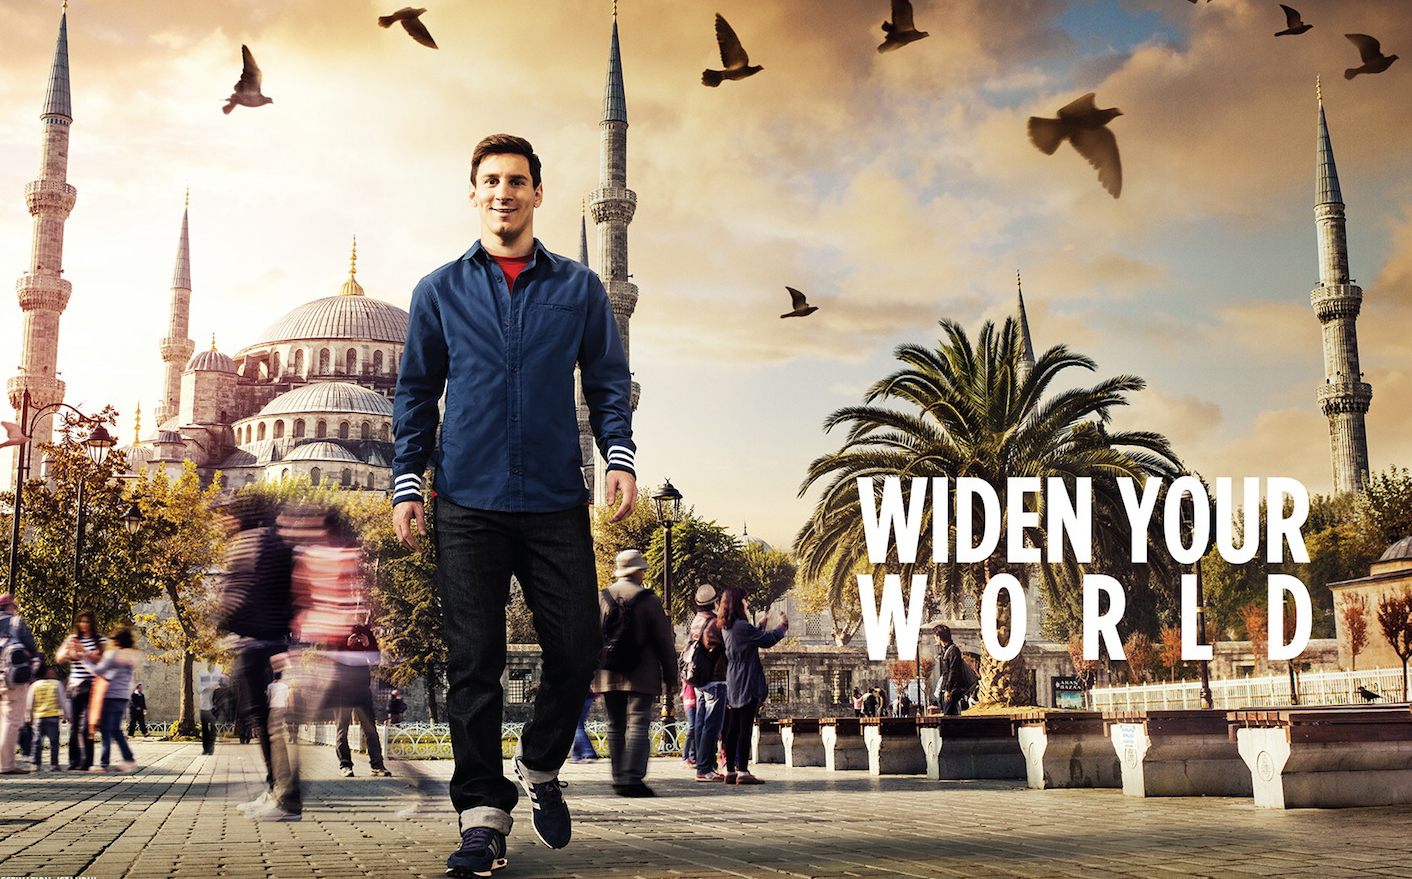 Lema de Turkish Airlines: "Widen your world"